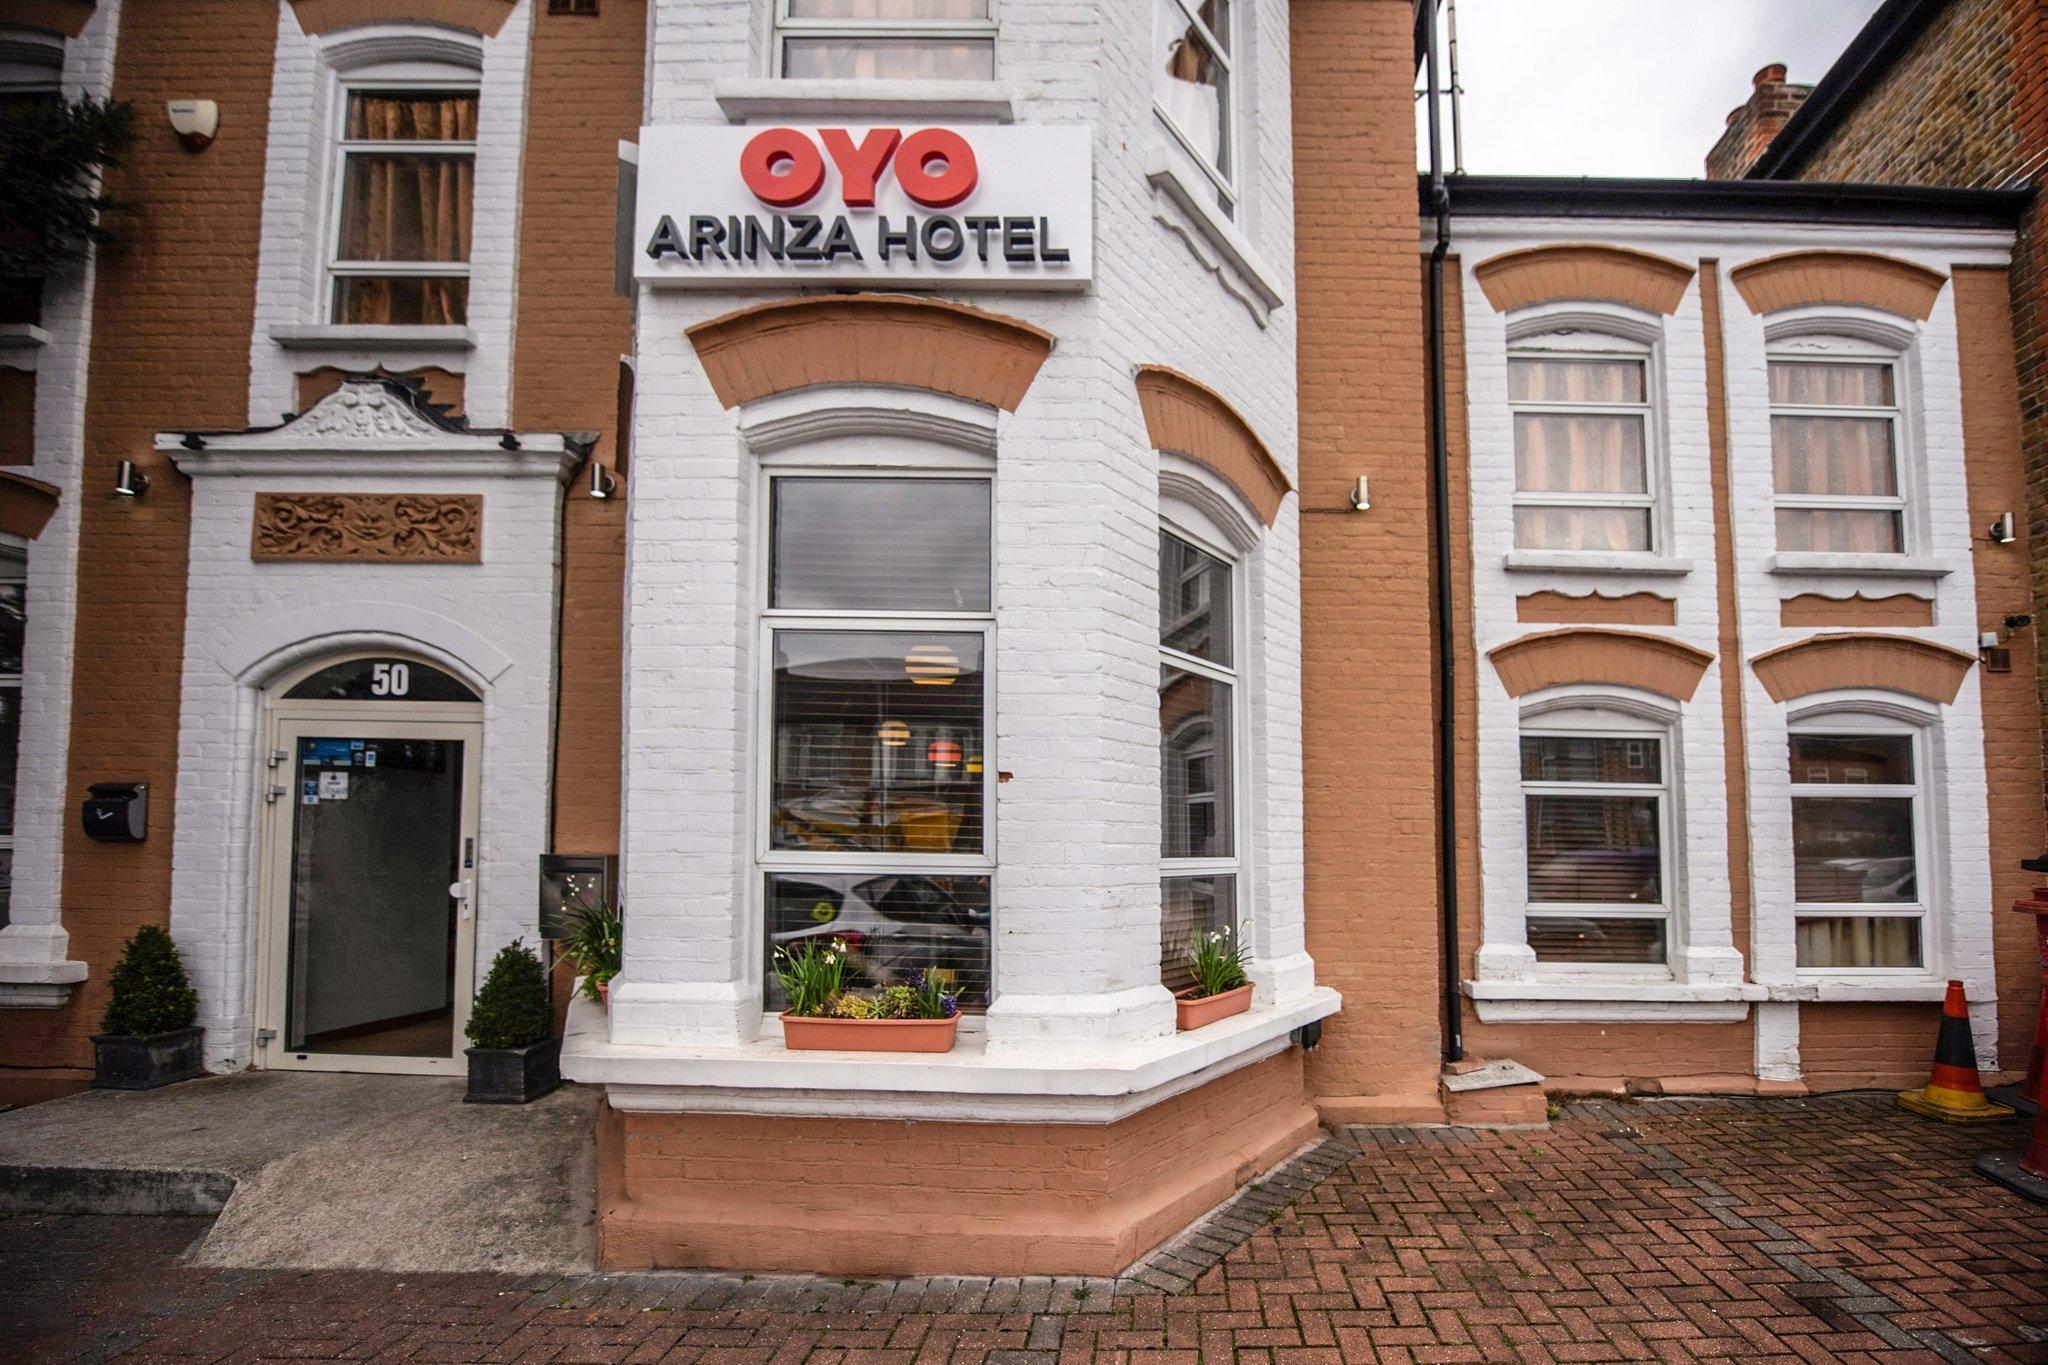 OYO Arinza Hotel, London Ilford image